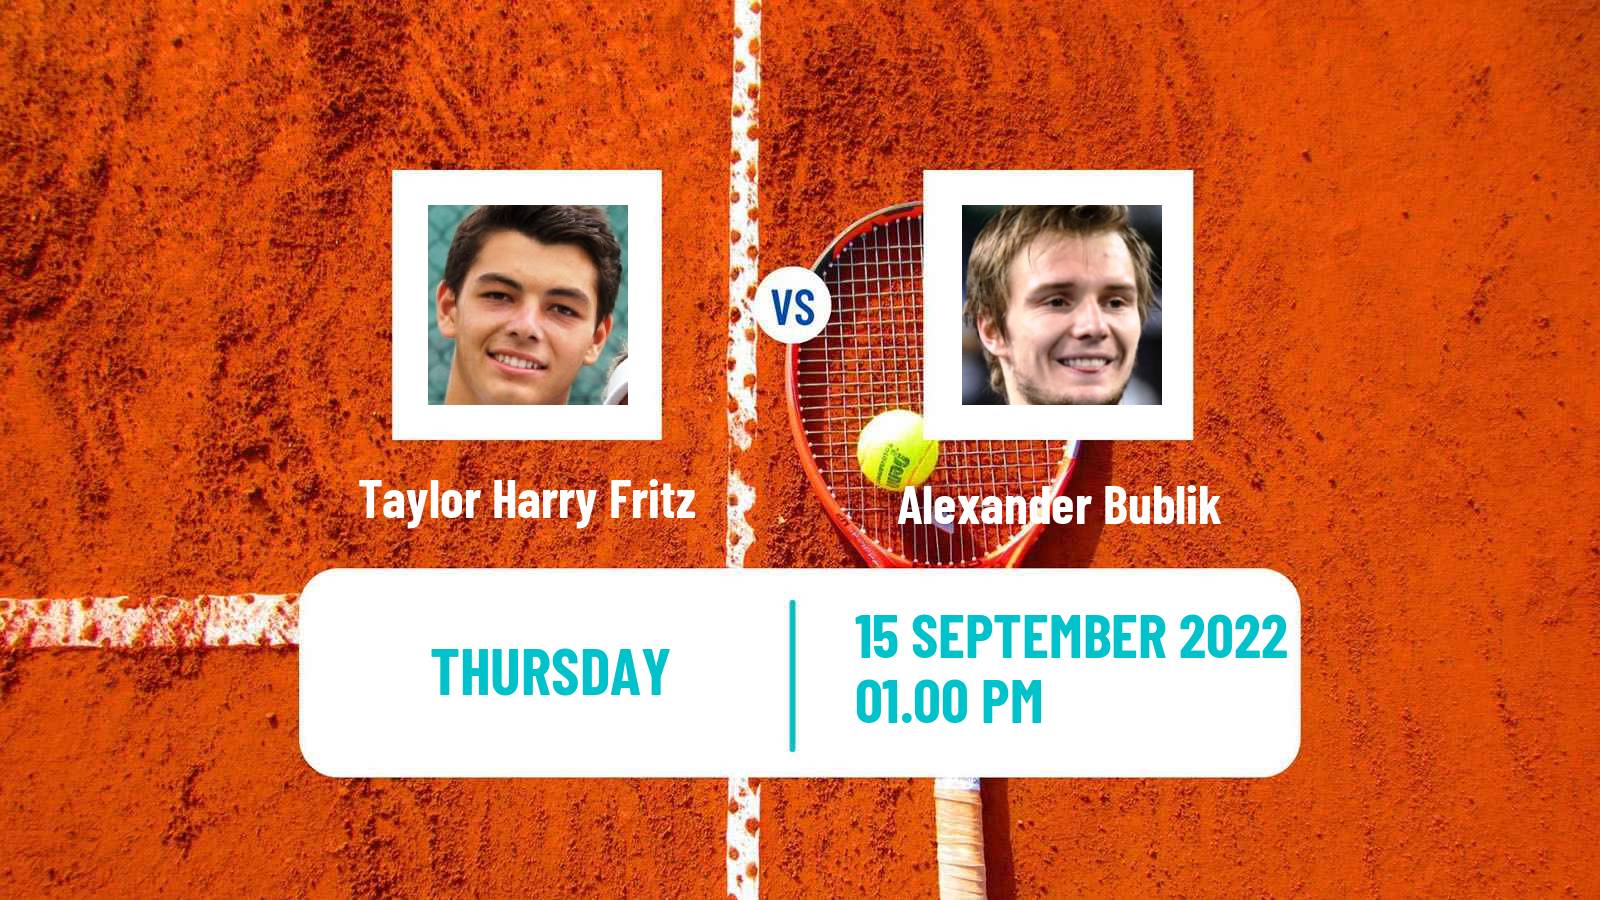 Tennis Davis Cup World Group Taylor Harry Fritz - Alexander Bublik